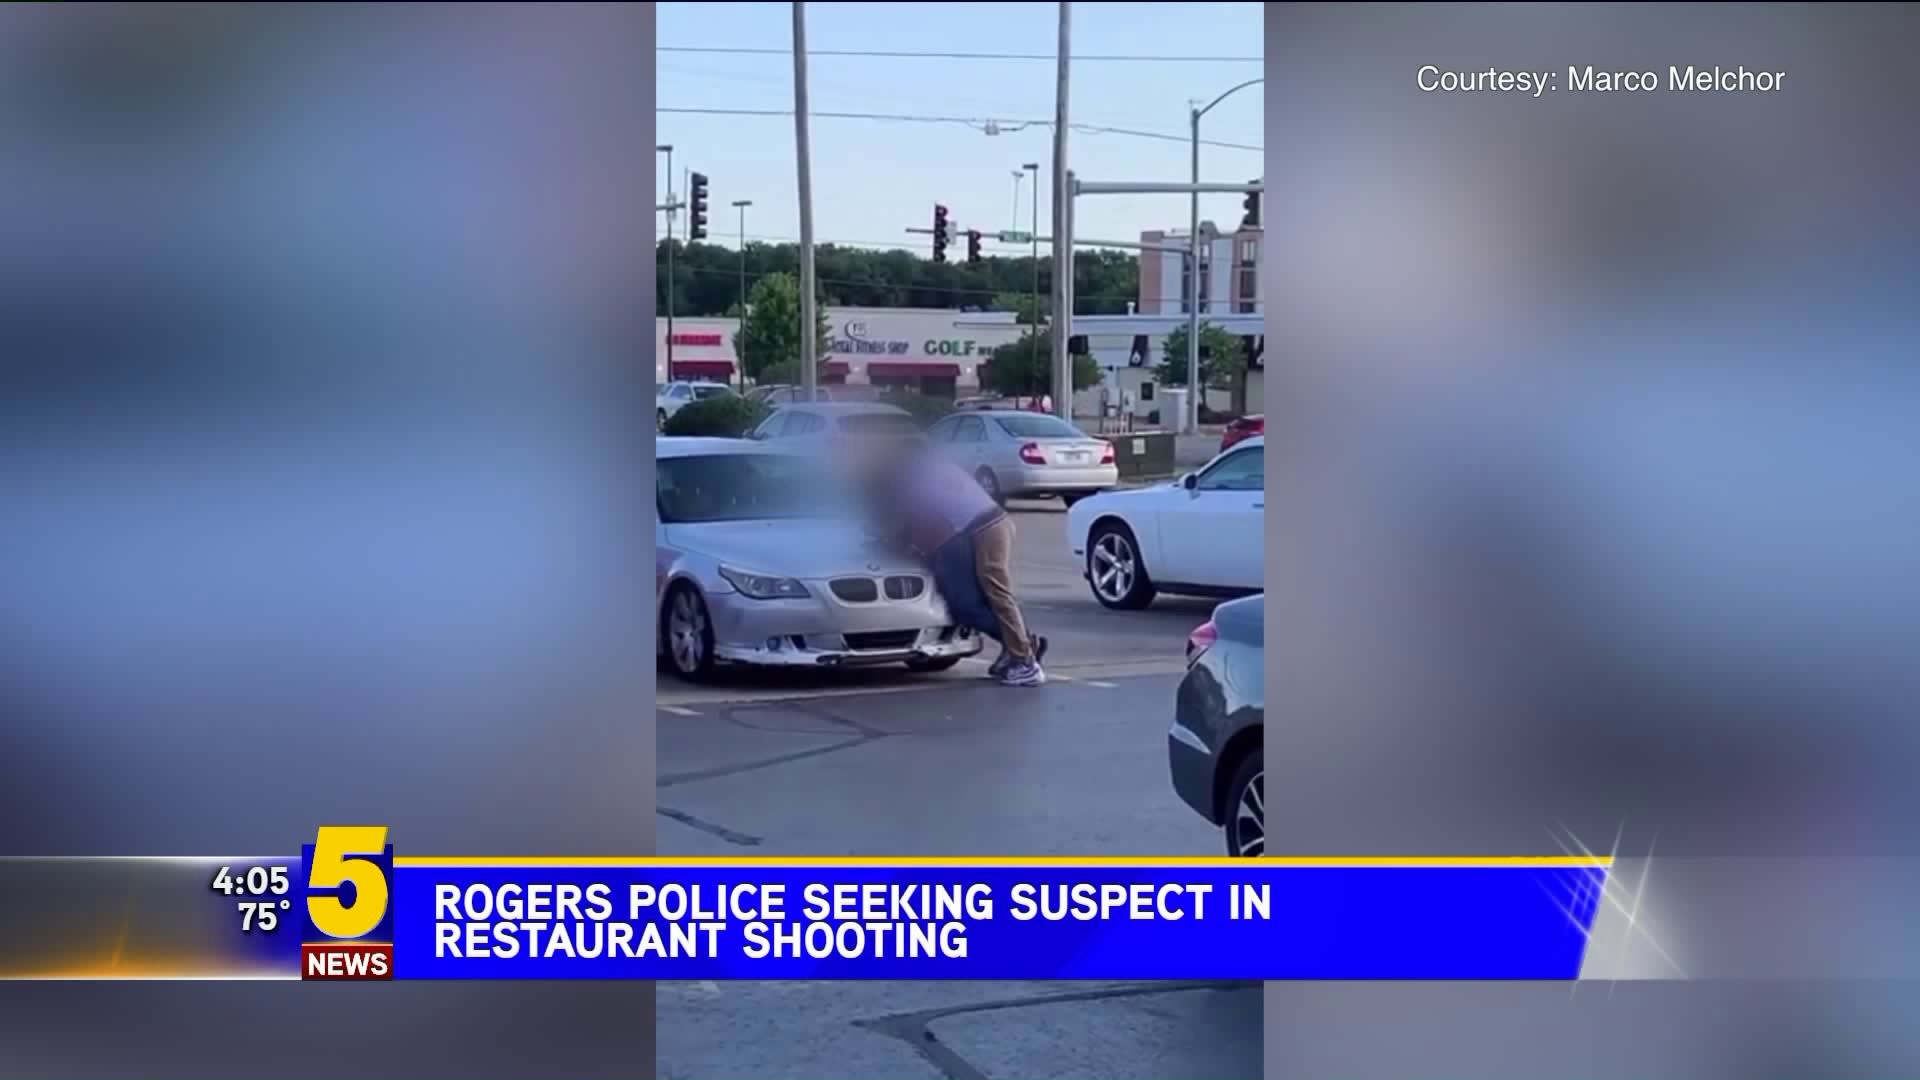 Rogers Police Seeking Suspect in Restaurant Shooting